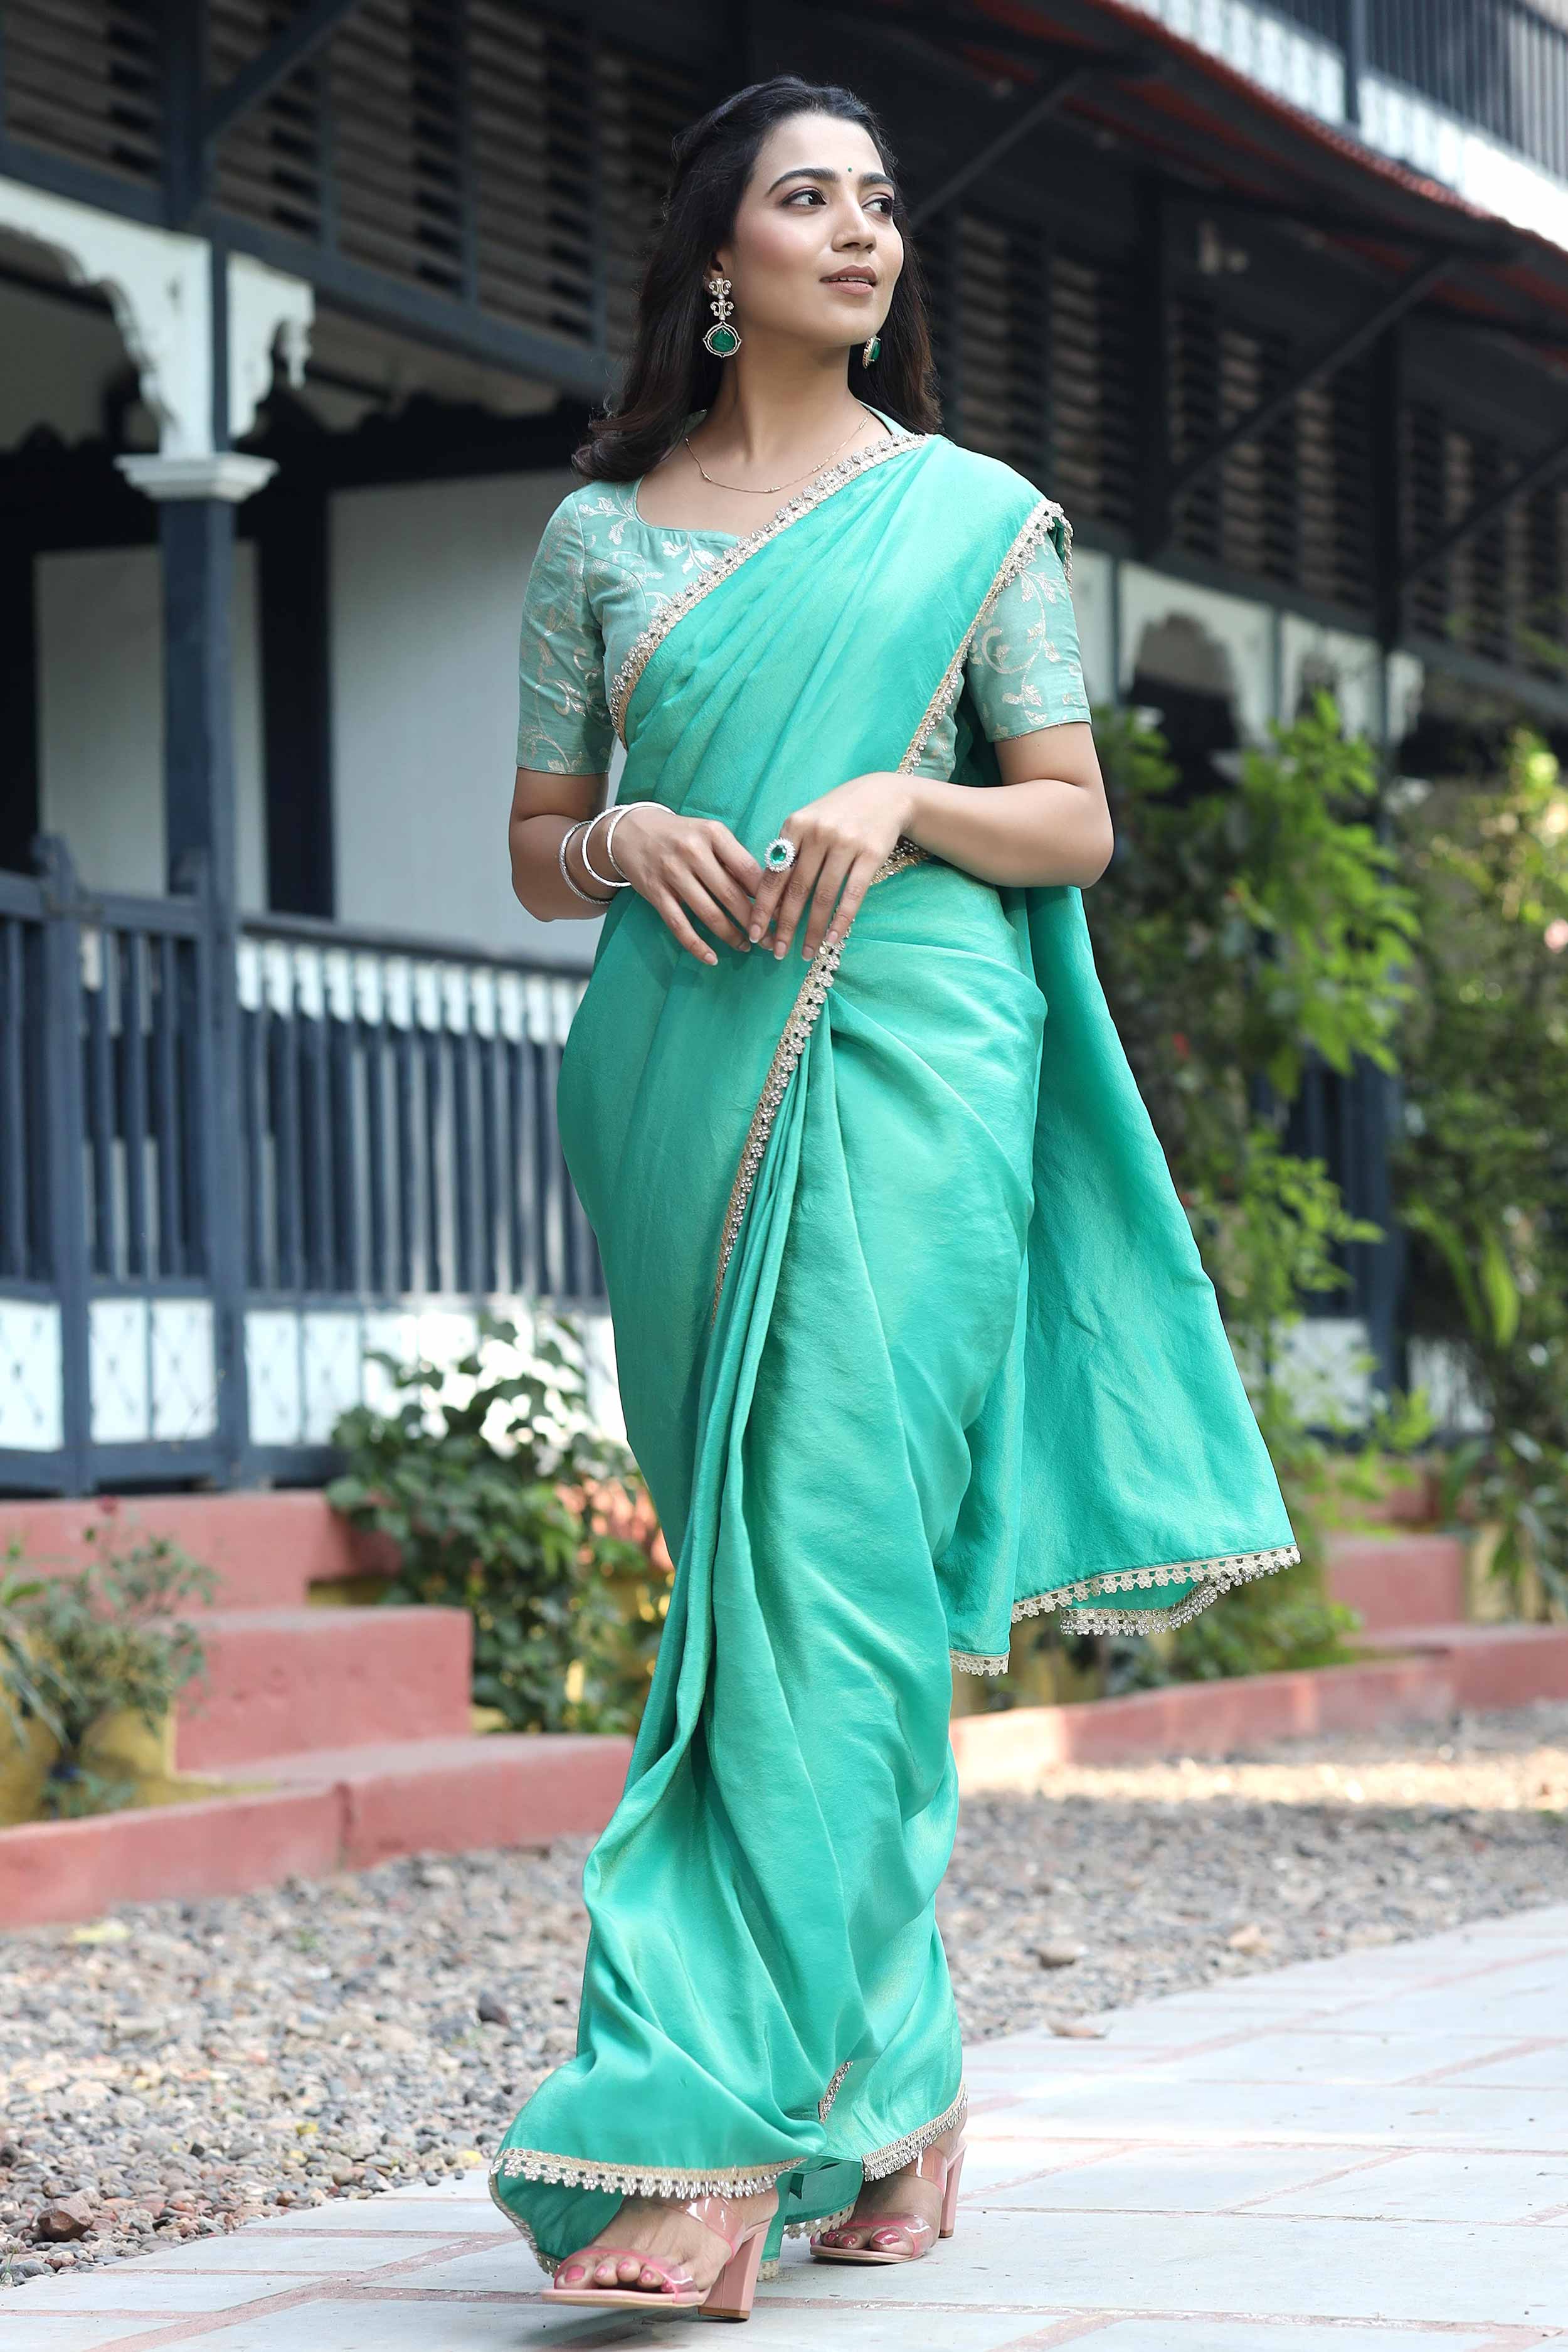 a woman in green saree